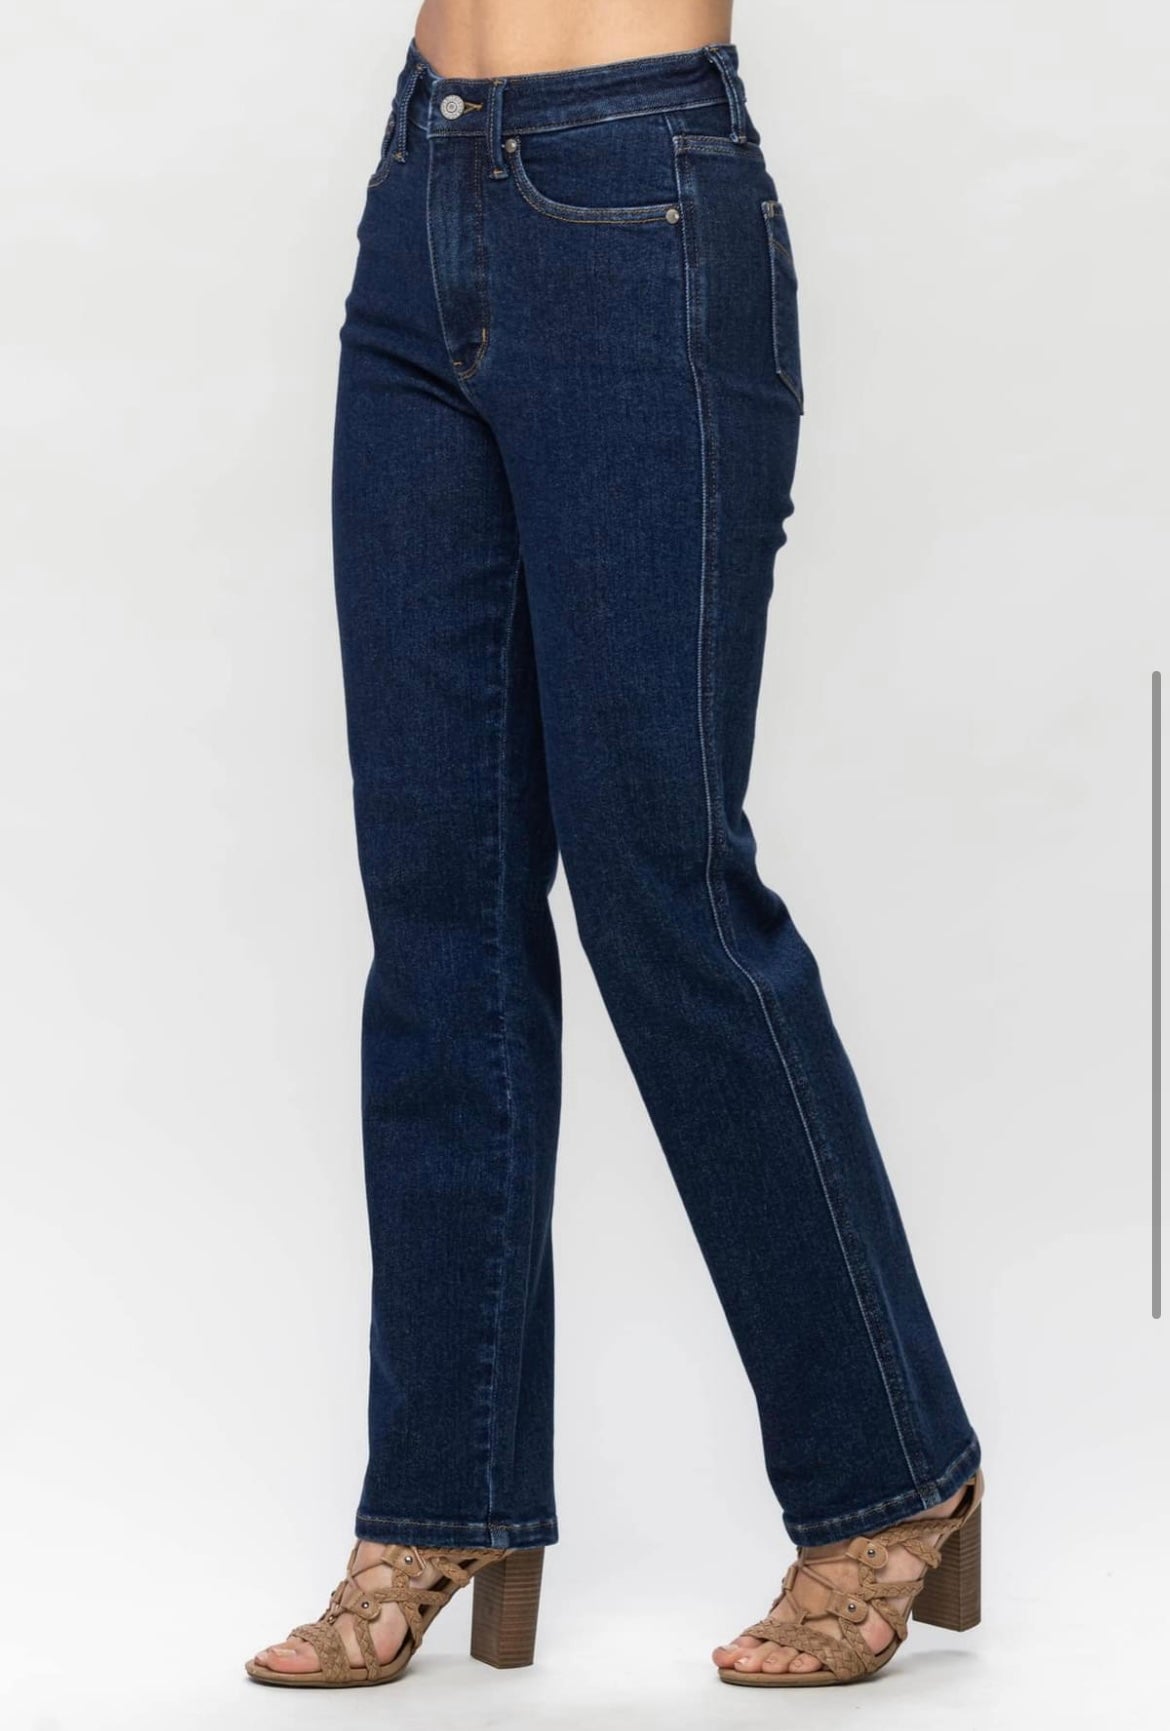 Jeans azules Judy de pierna recta con control de barriga